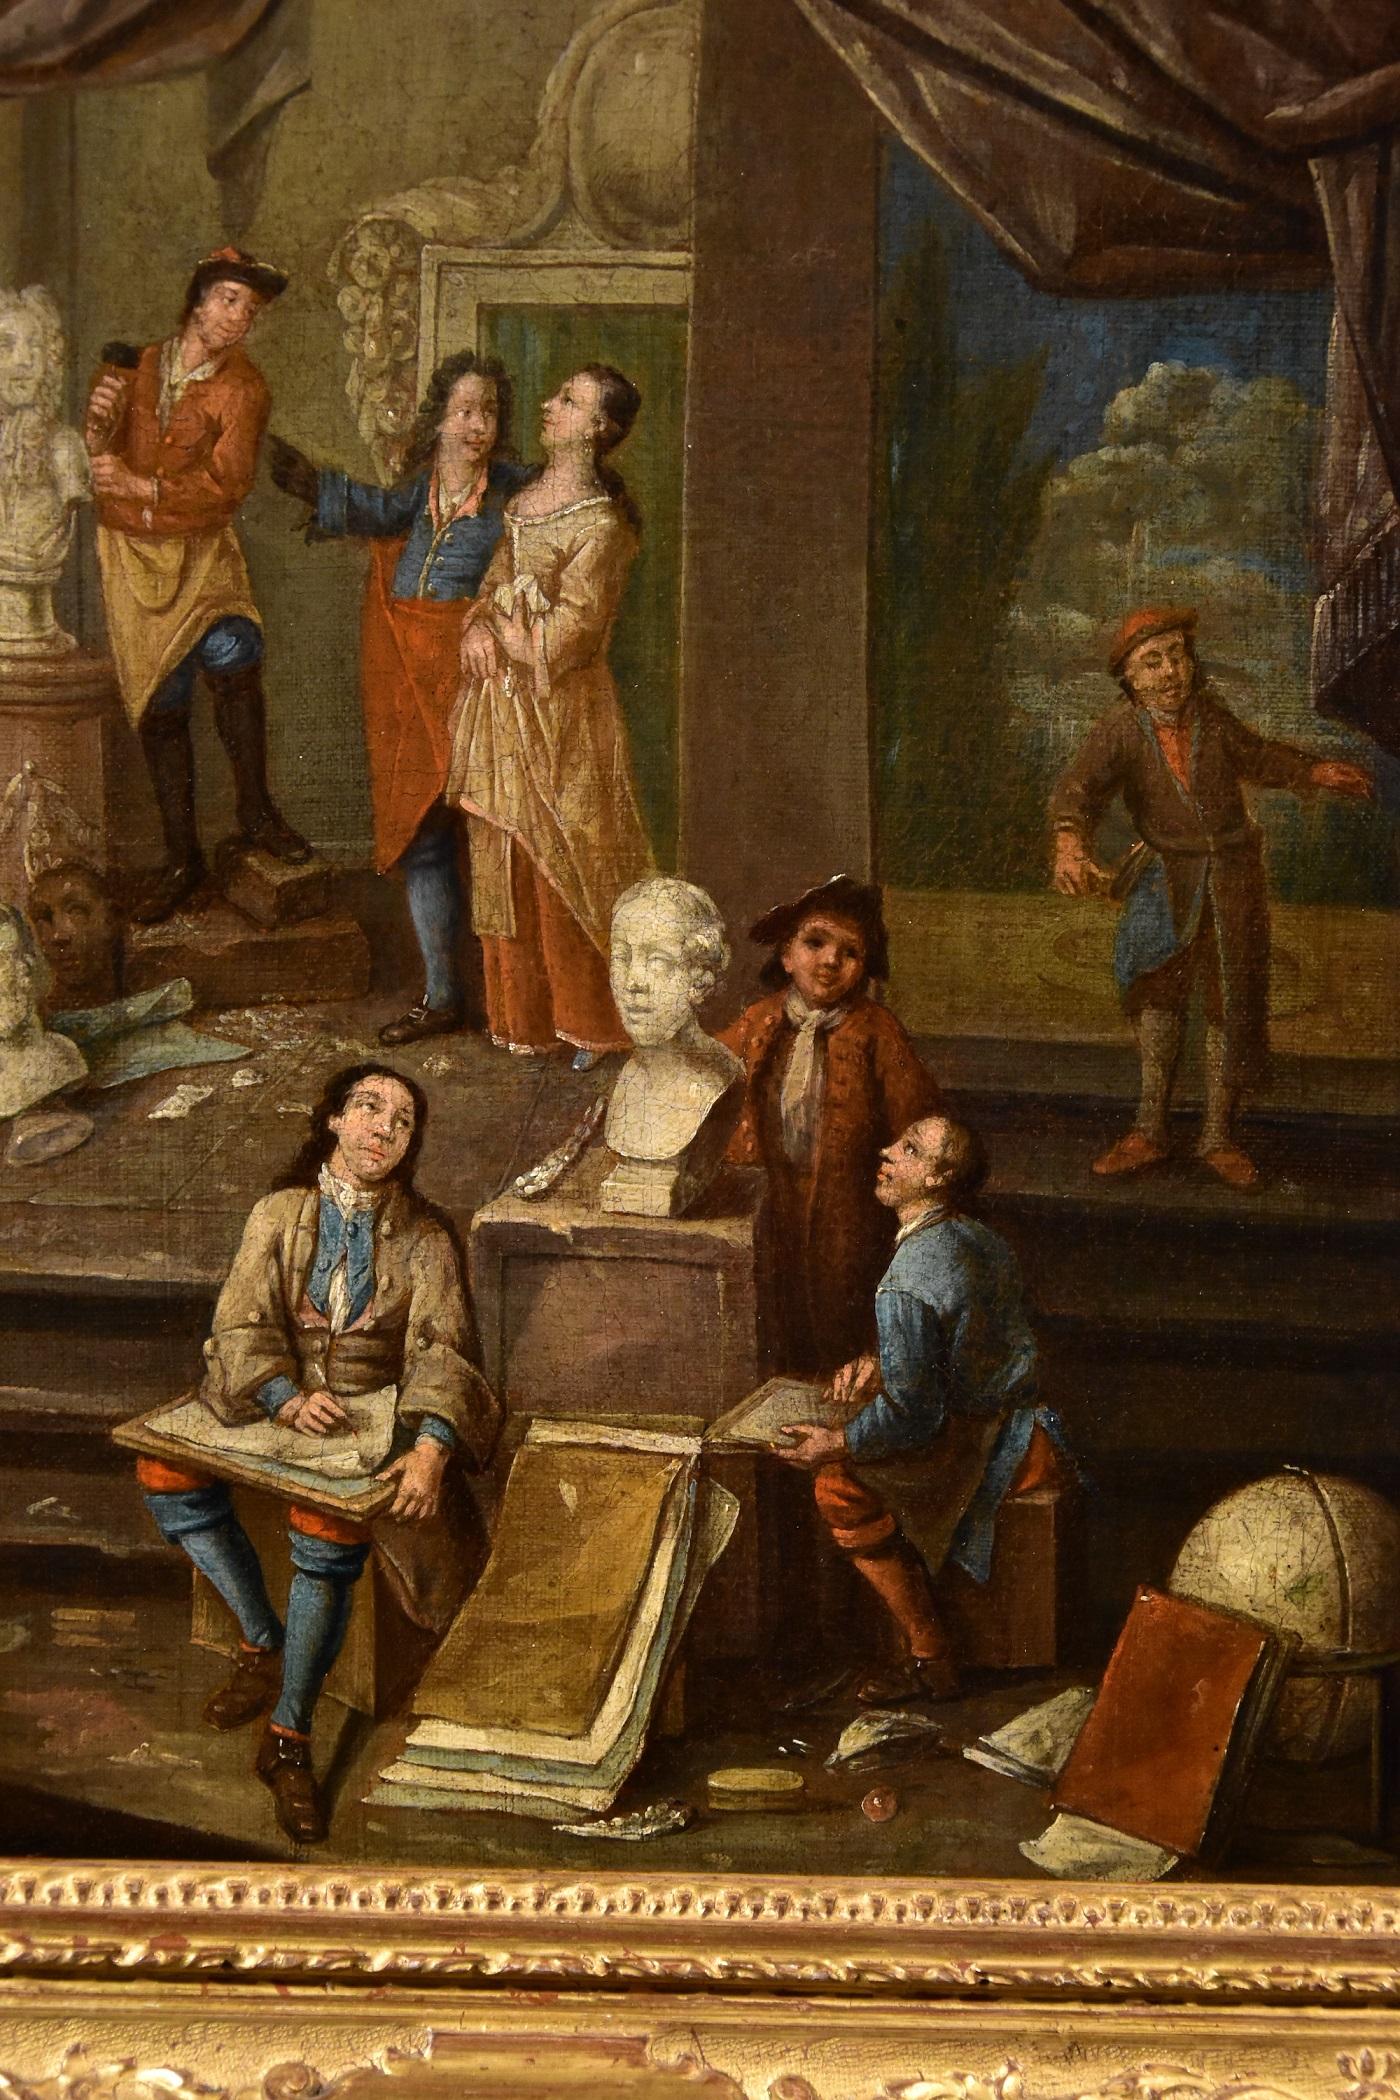 Artist Horemans Paint Oil on canvas Old master 18th Century Flemish Painter Art - Brown Landscape Painting by Jan Josef Horemans the Elder (Antwerp 1682-1752)